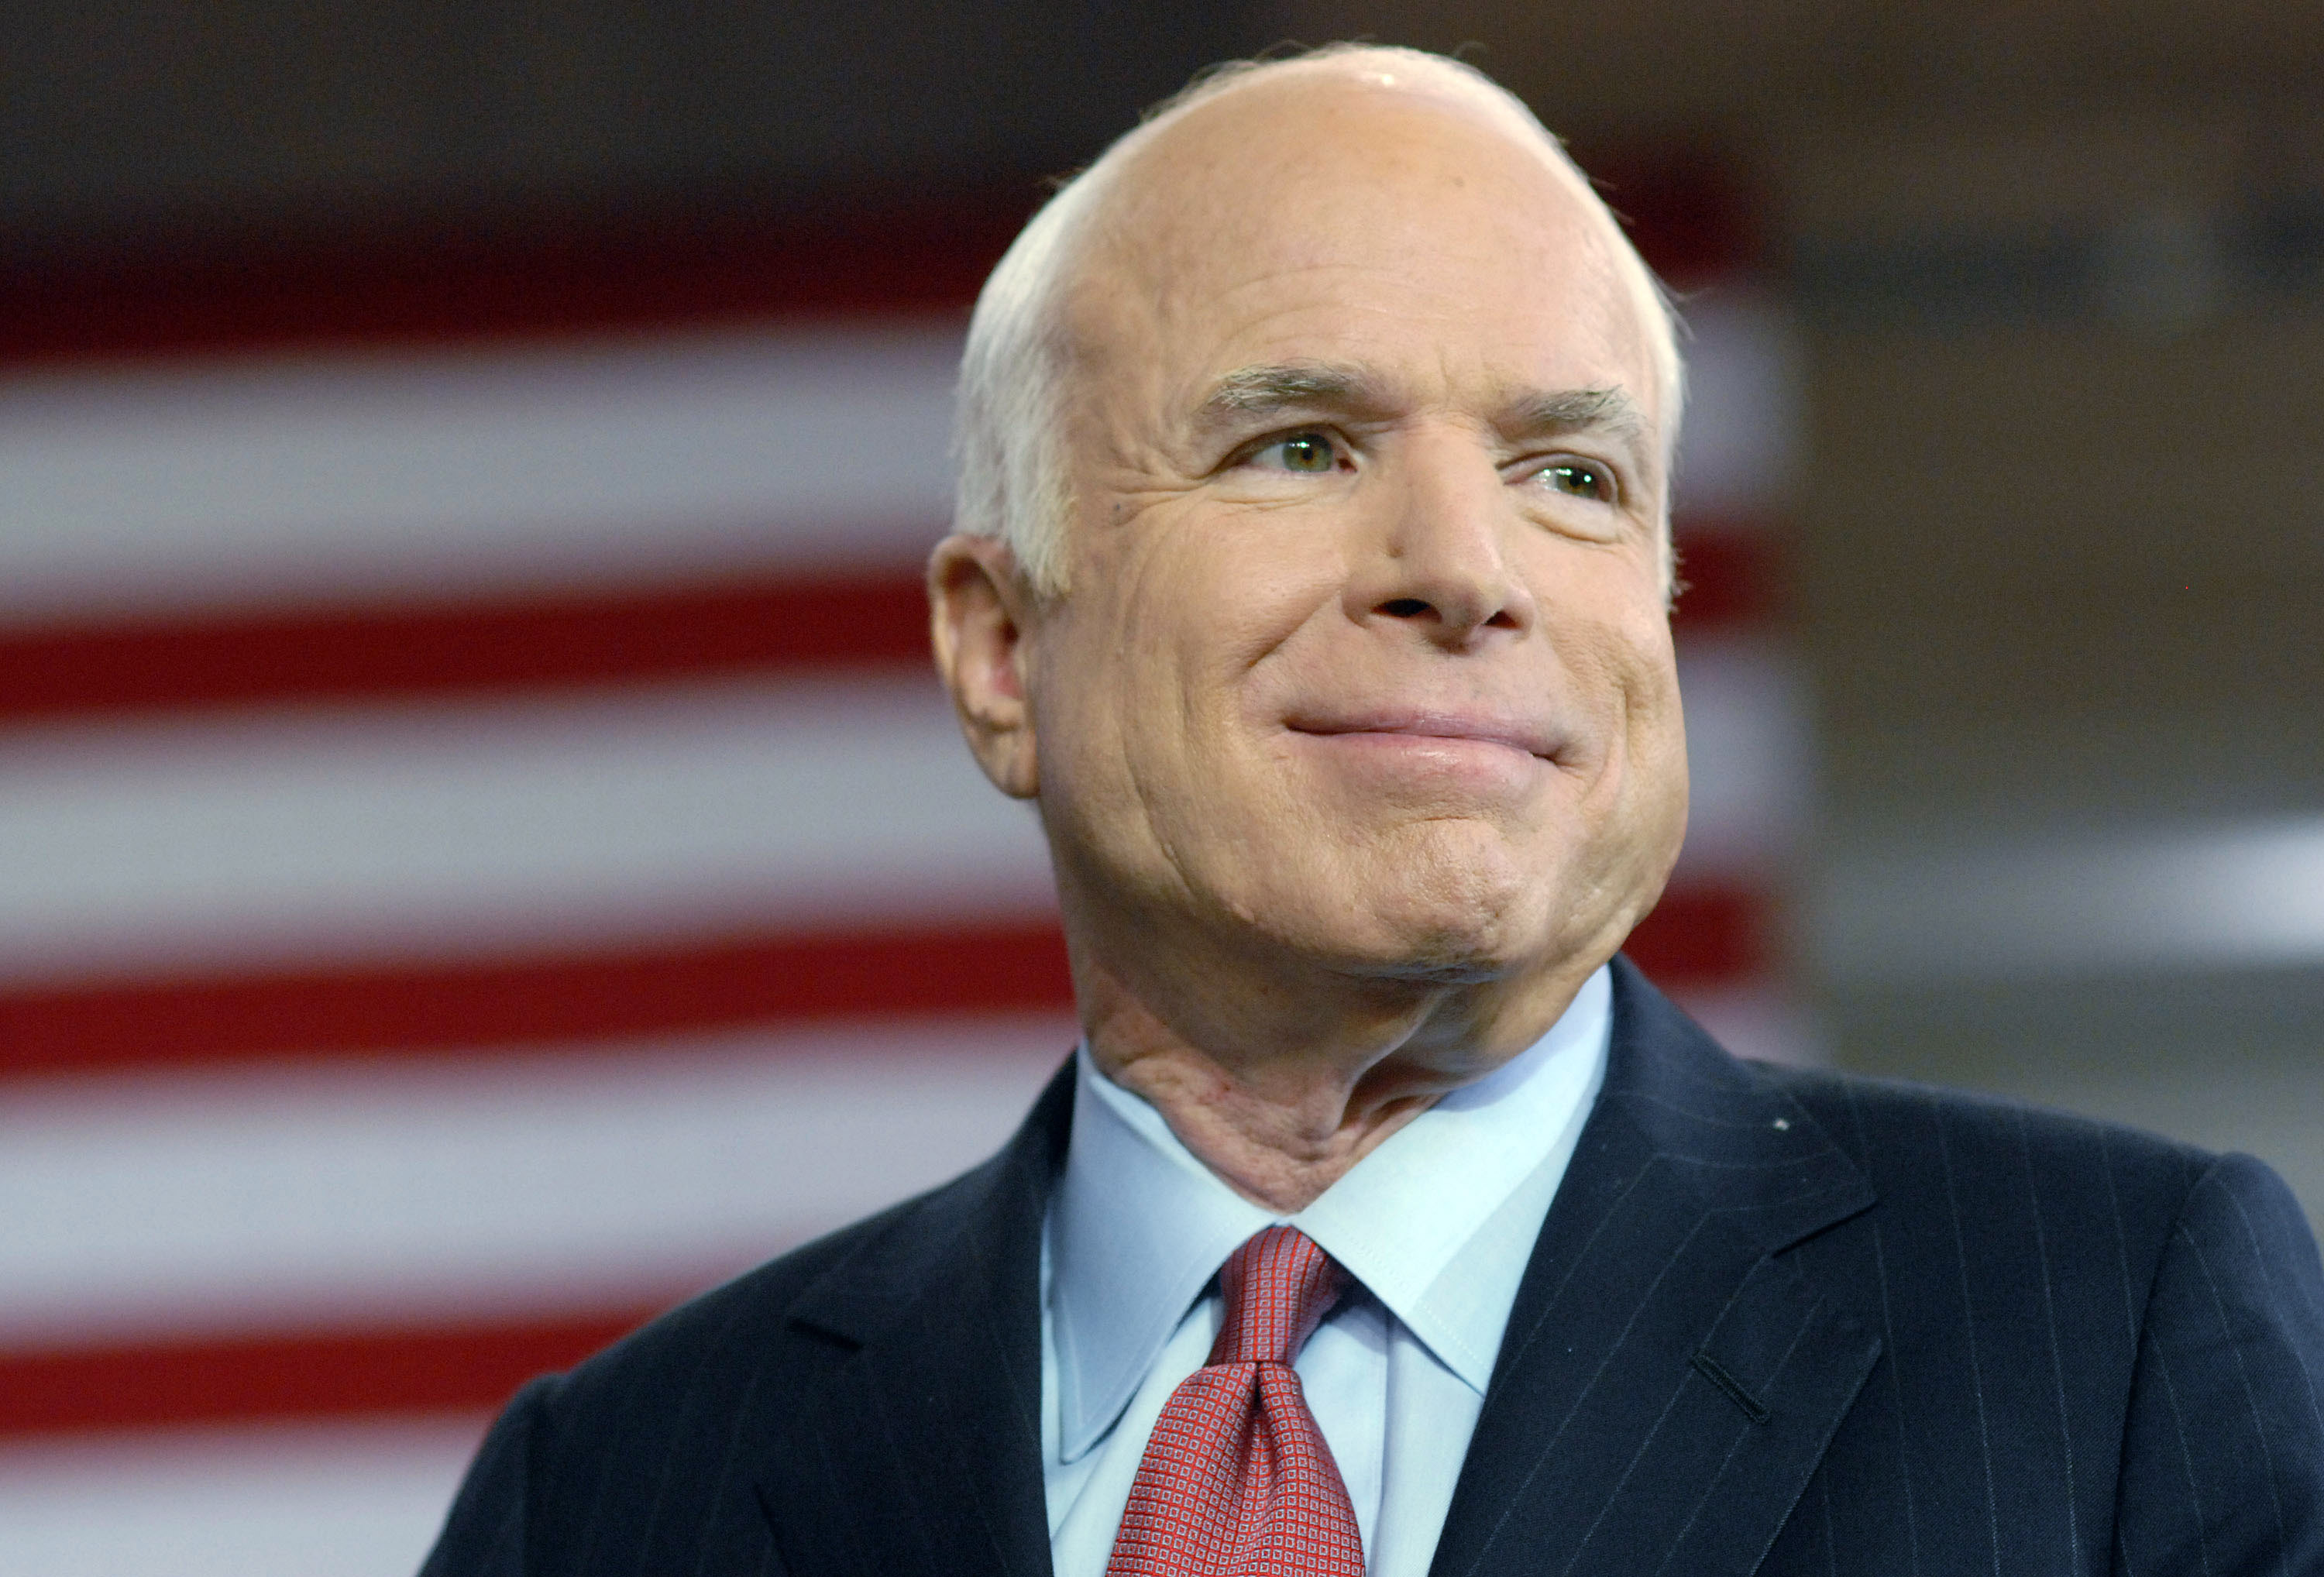 In this file photo, Sen. John McCain (R-AZ) speaks at a town hall meeting in Aug. 12, 2008 in York, Pennsylvania.